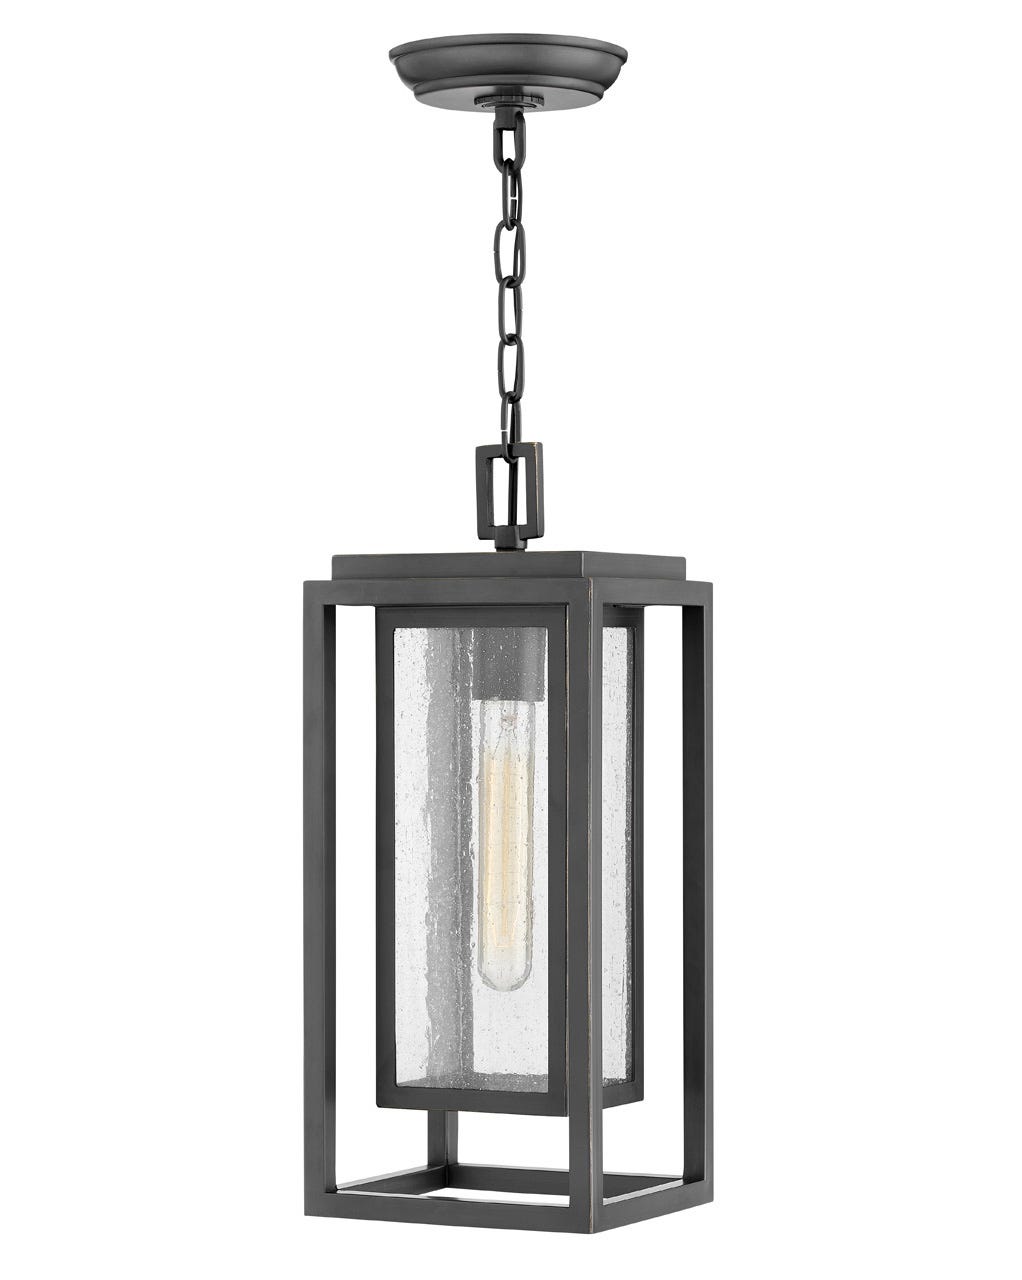 OUTDOOR REPUBLIC Hanging Lantern Outdoor Light Fixture l Hanging Maxim Oil Rubbed Bronze 6.0x7.0x16.75 